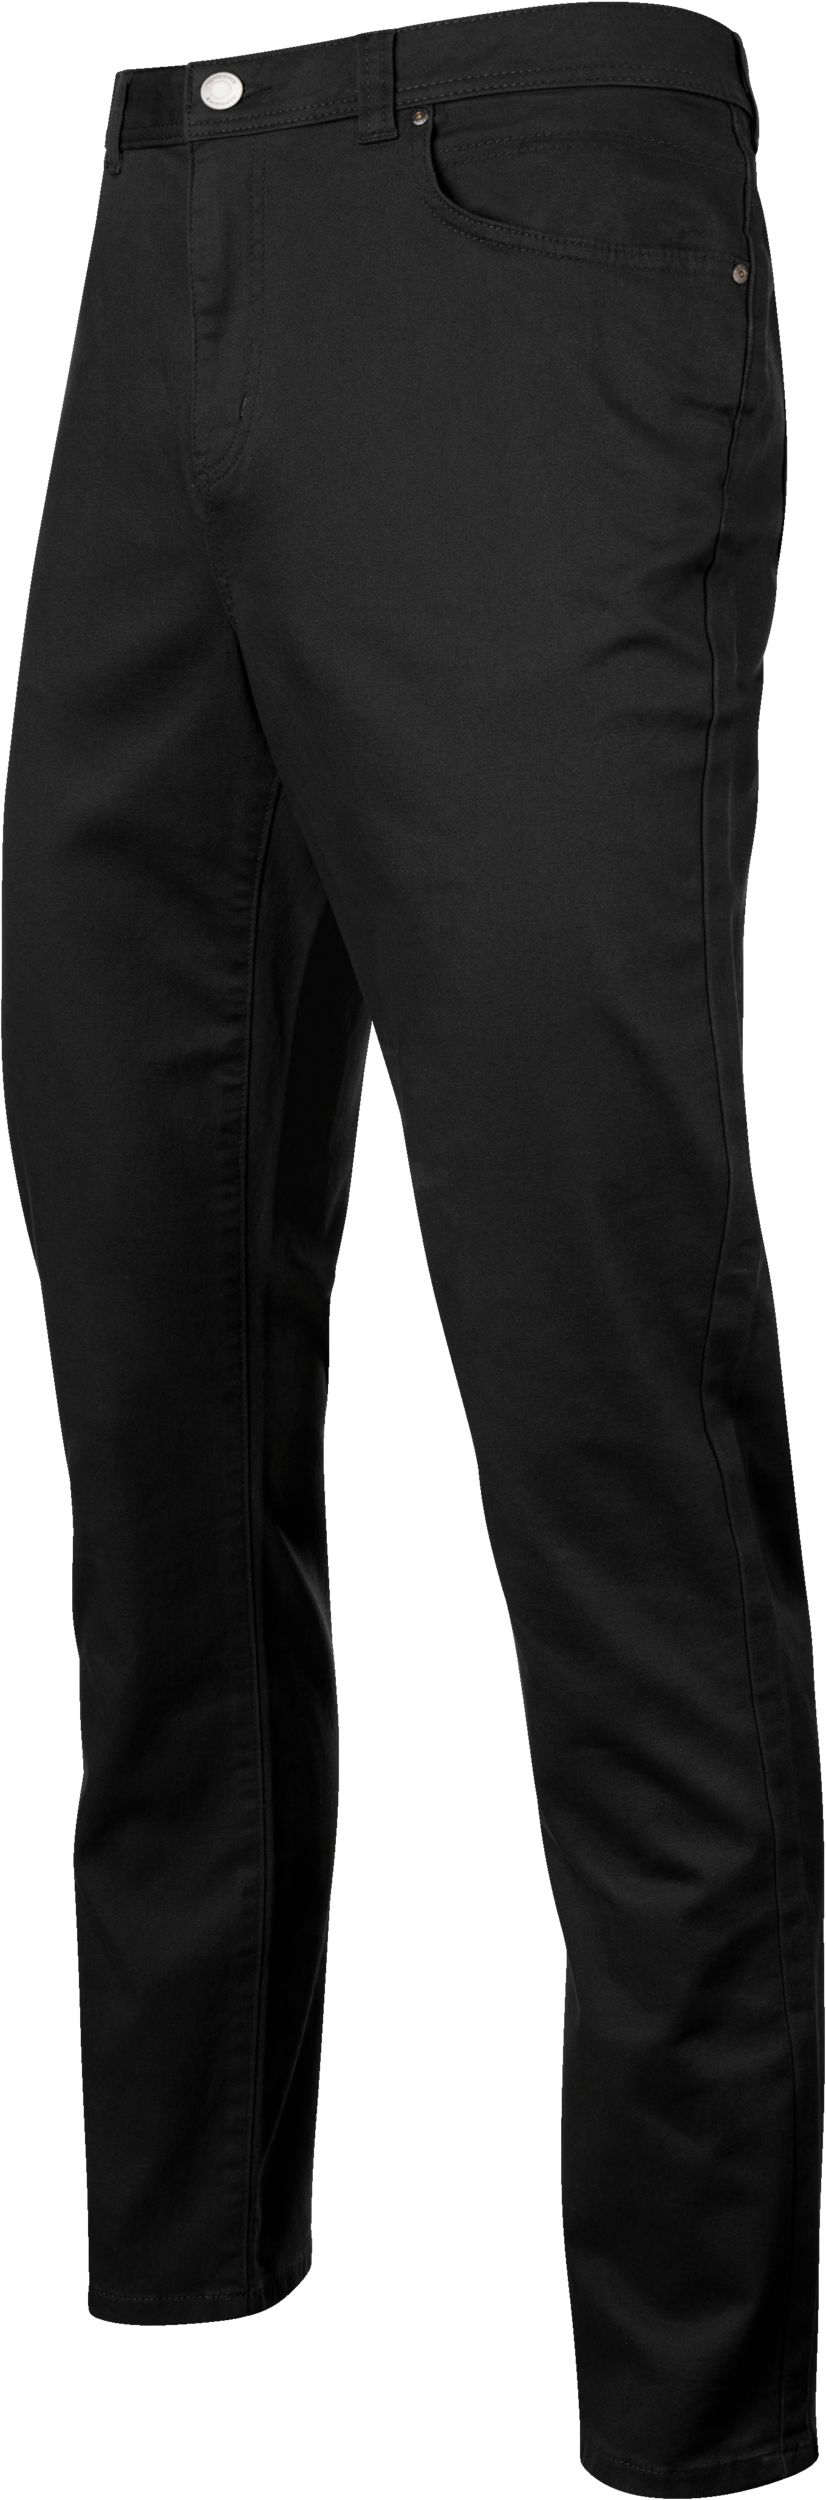 Ripzone Men's Mesa 5 Pocket 34 Inch Pants | Sportchek